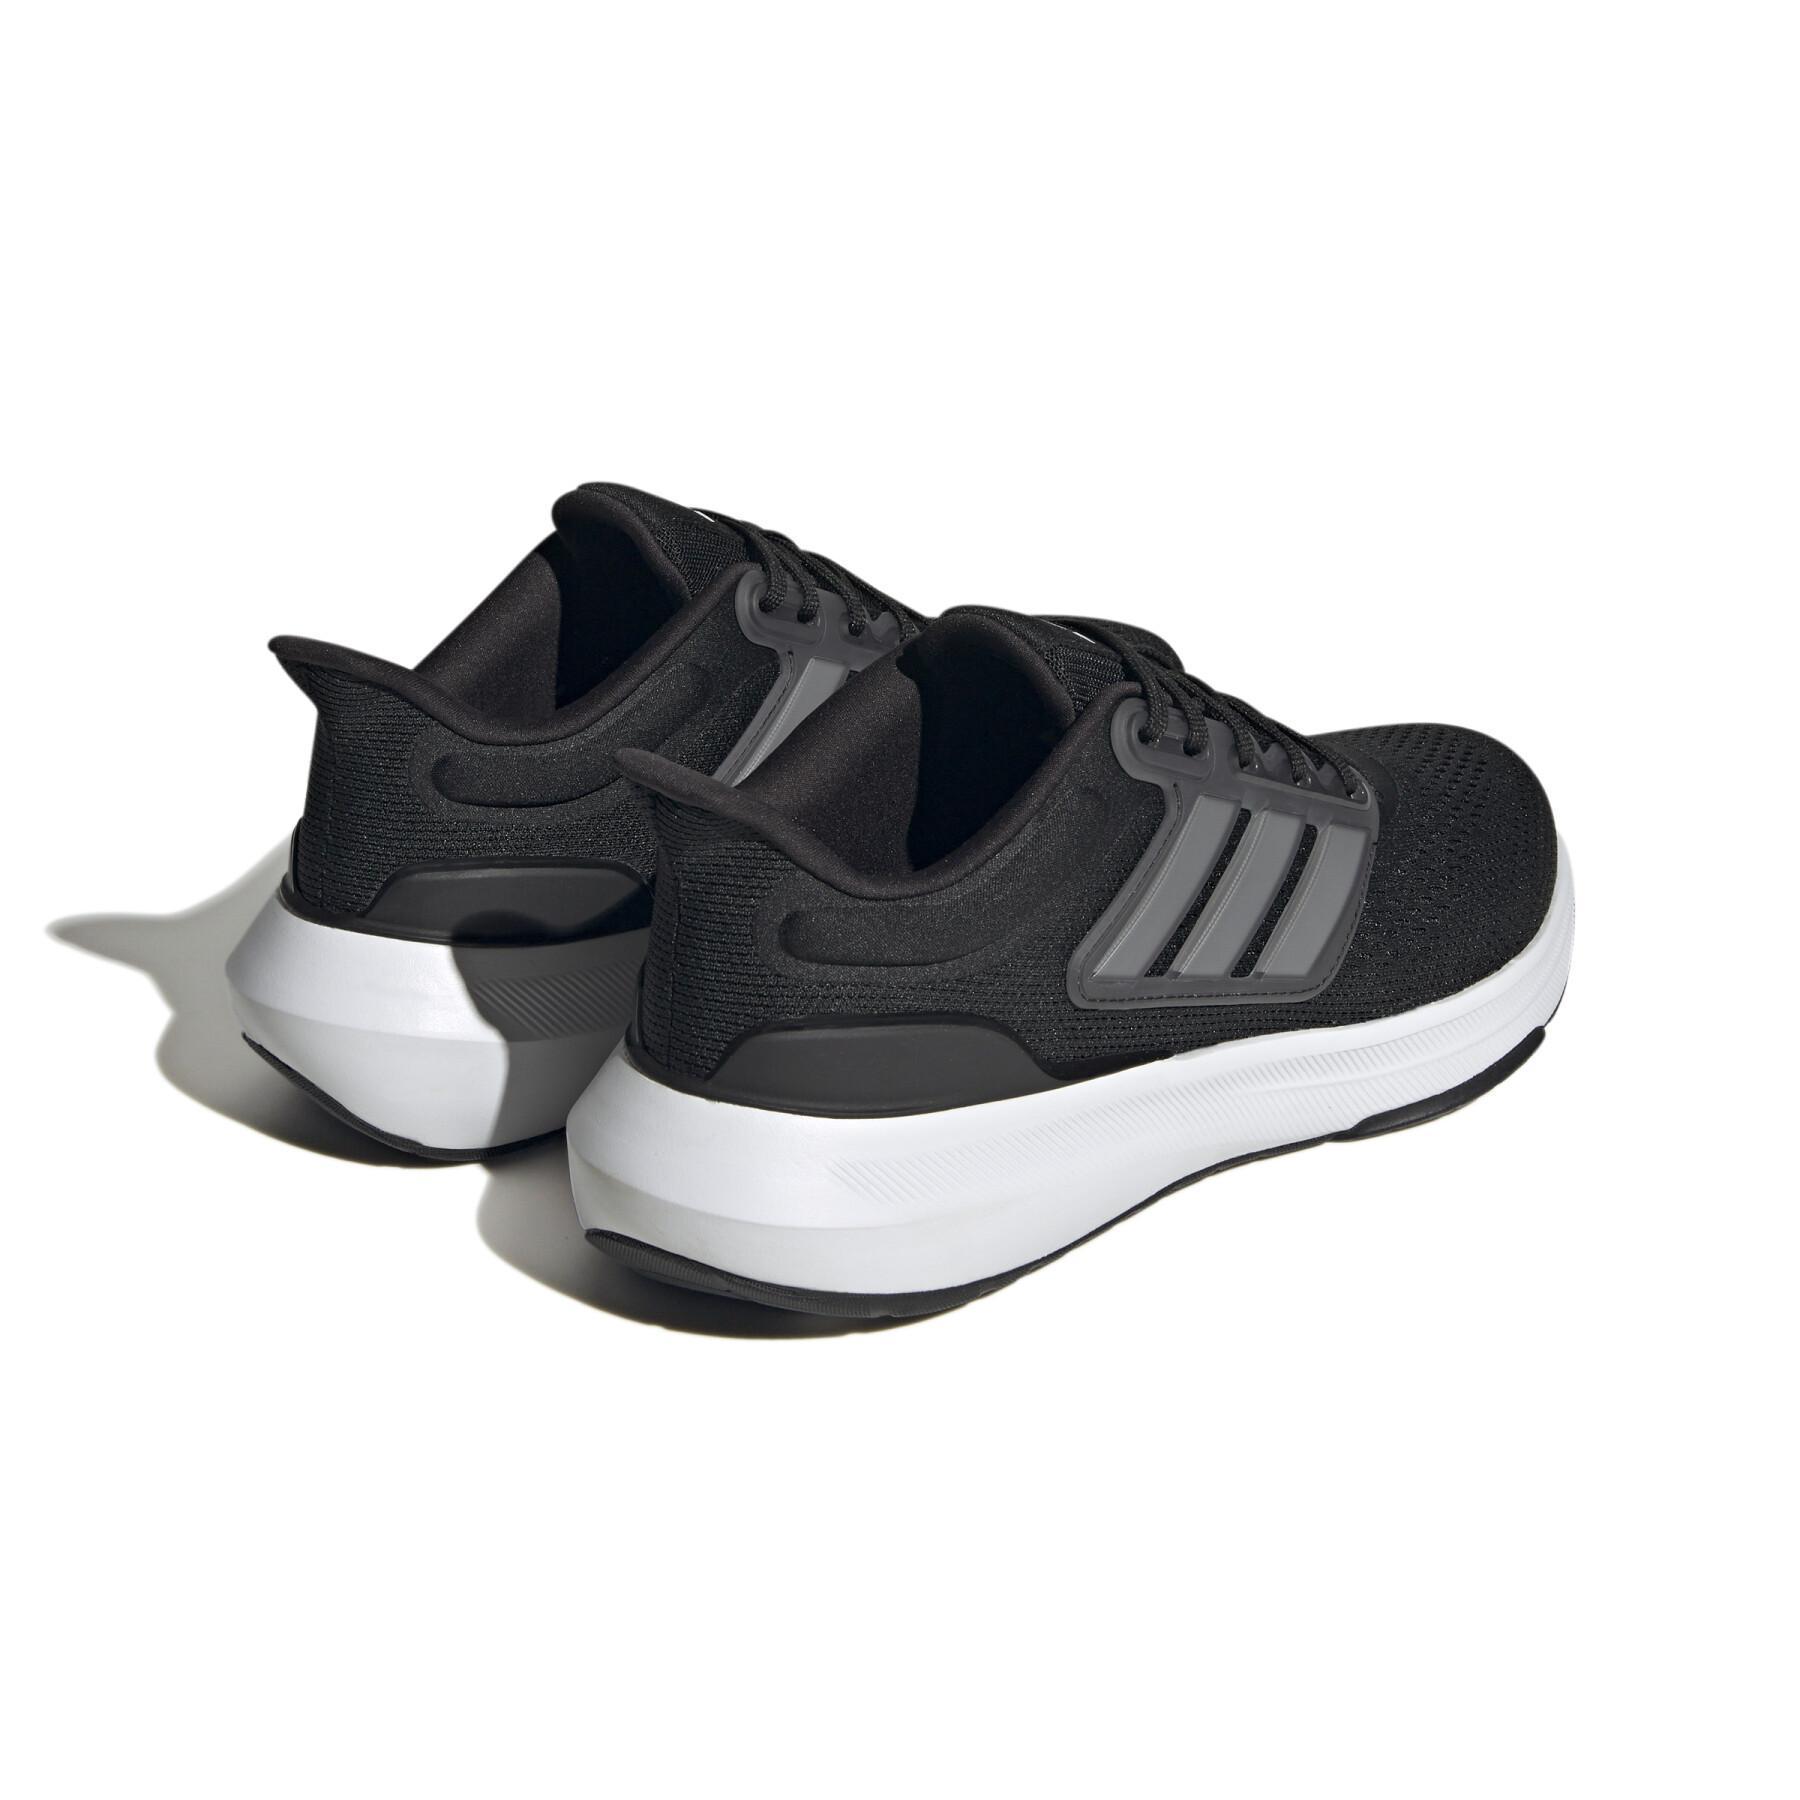 Running shoes adidas Ultrabounce